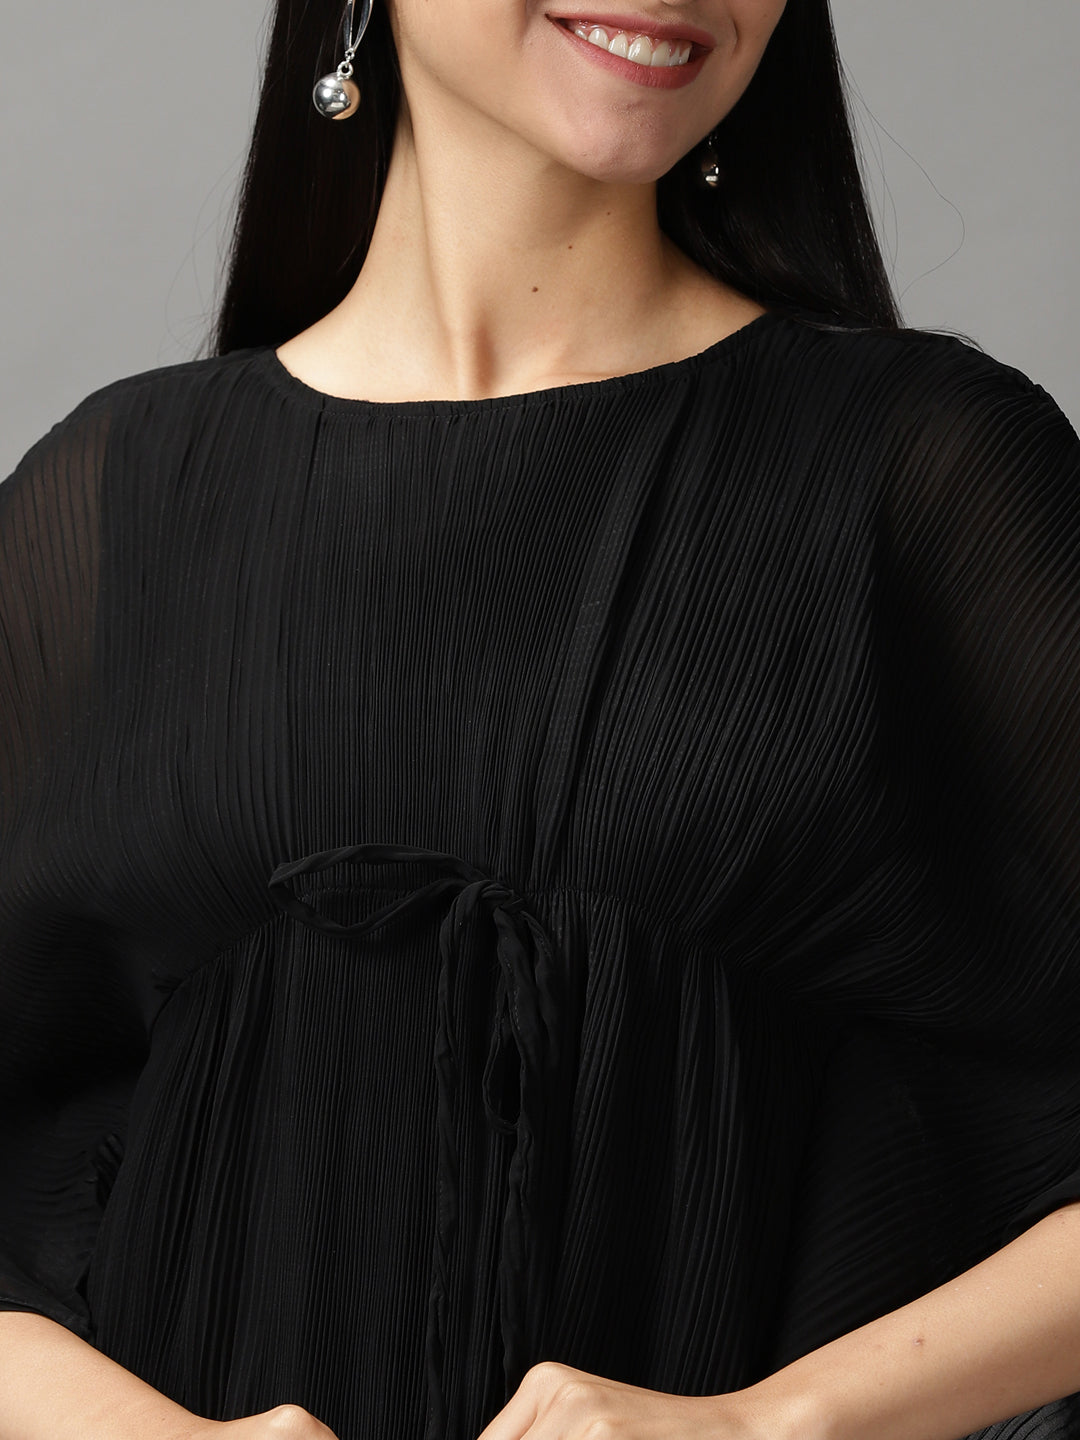 Women's Black Solid Kaftan Dress